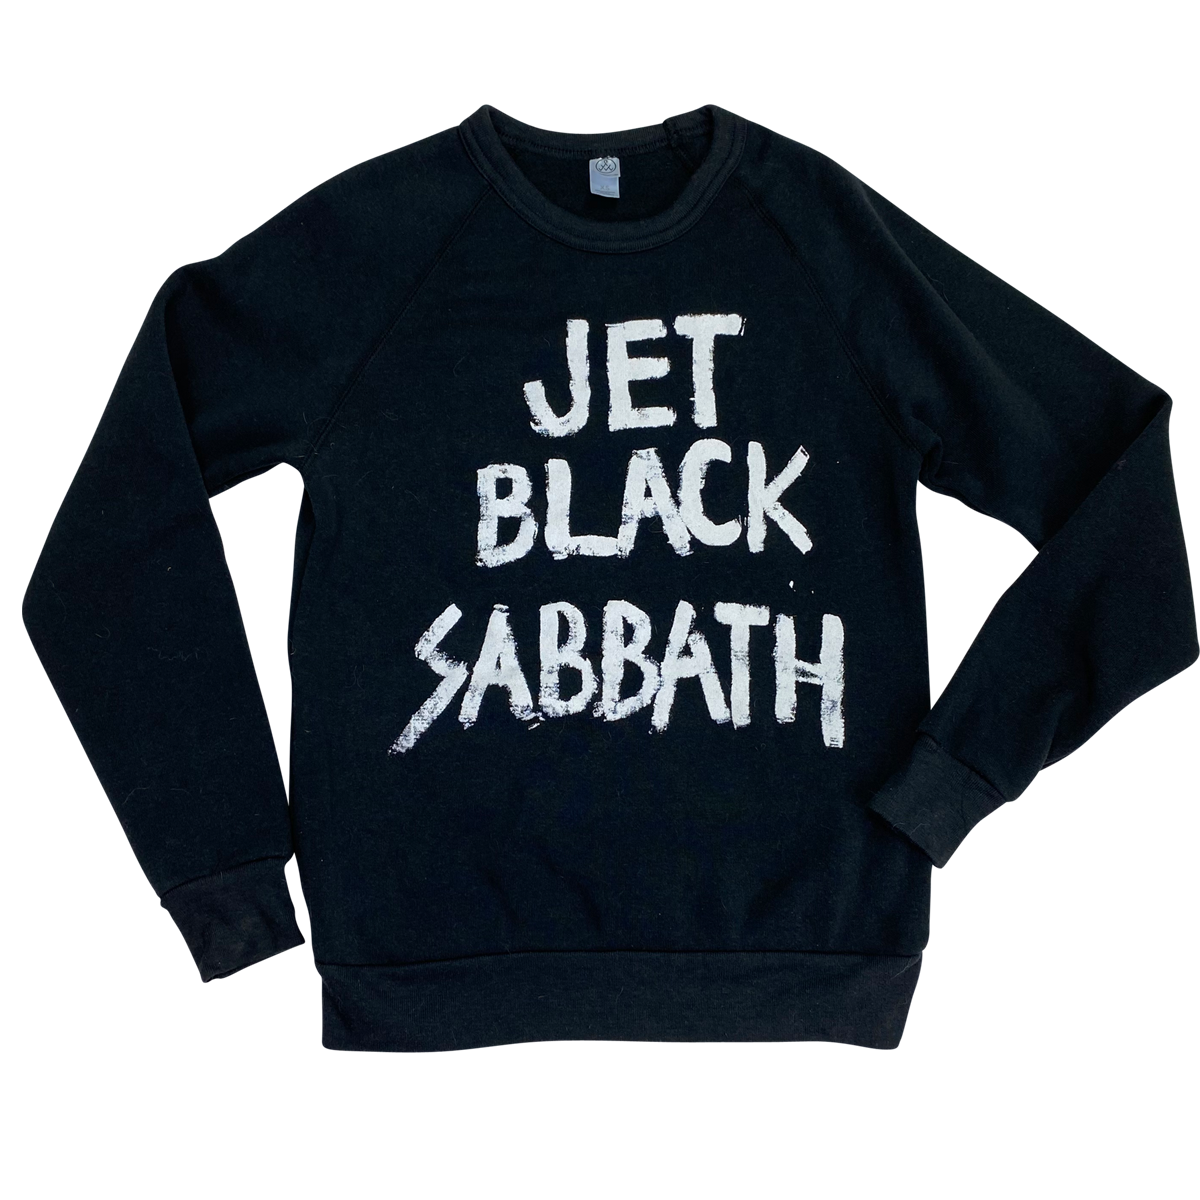 Jet Black Sabbath Unisex Sweatshirt in Black - Wild Ones